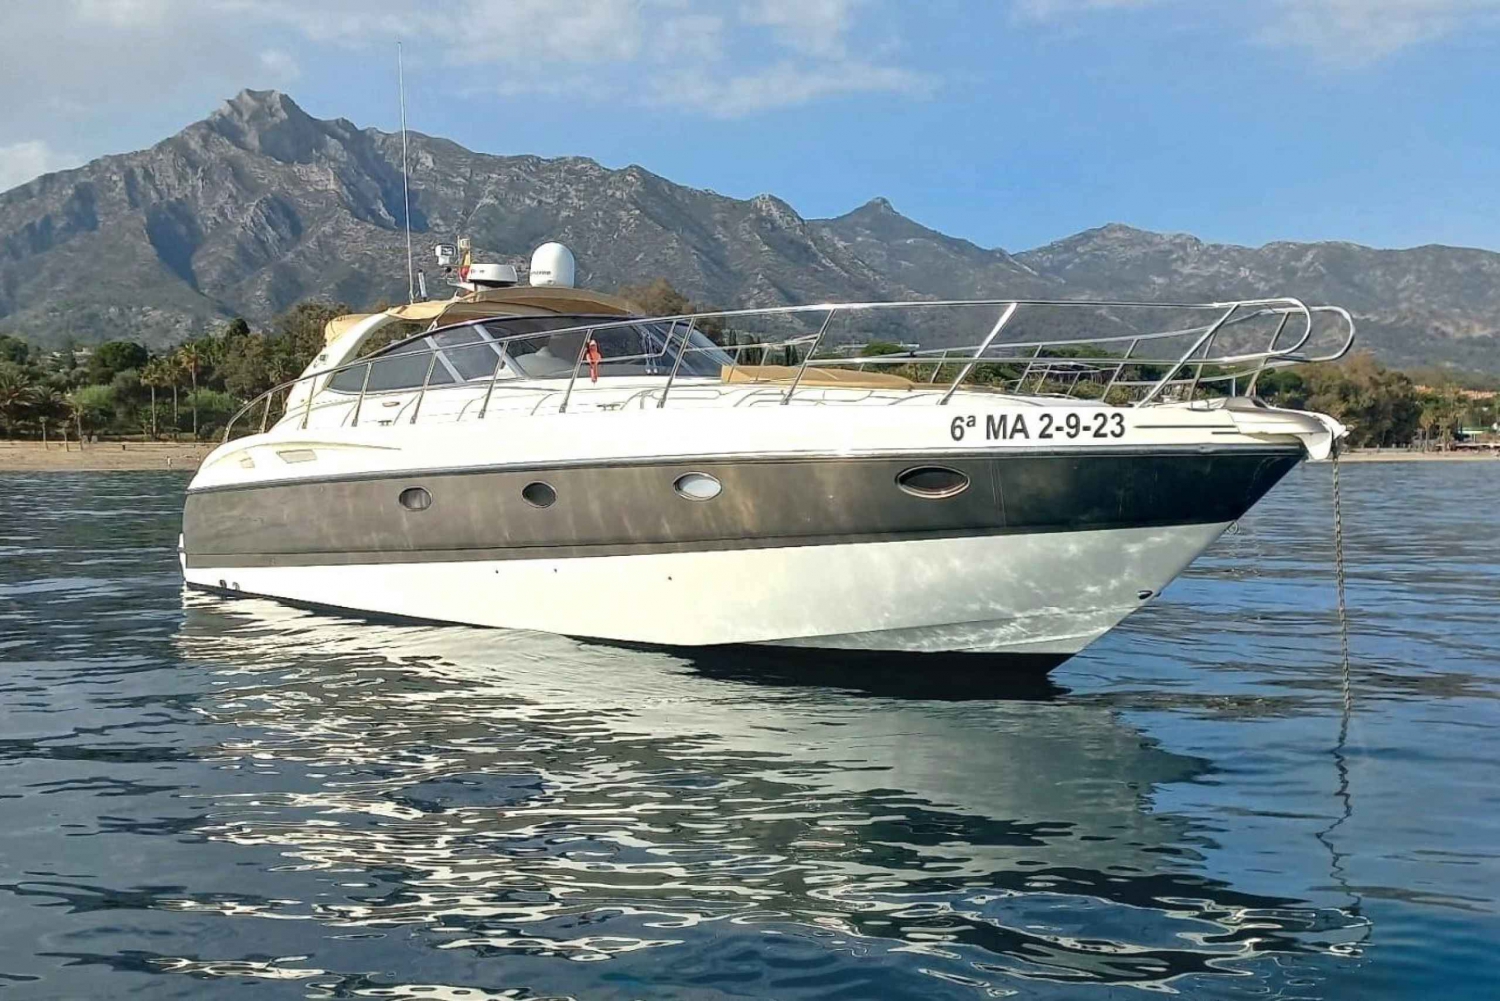 Marbella: Privat cruise i yacht